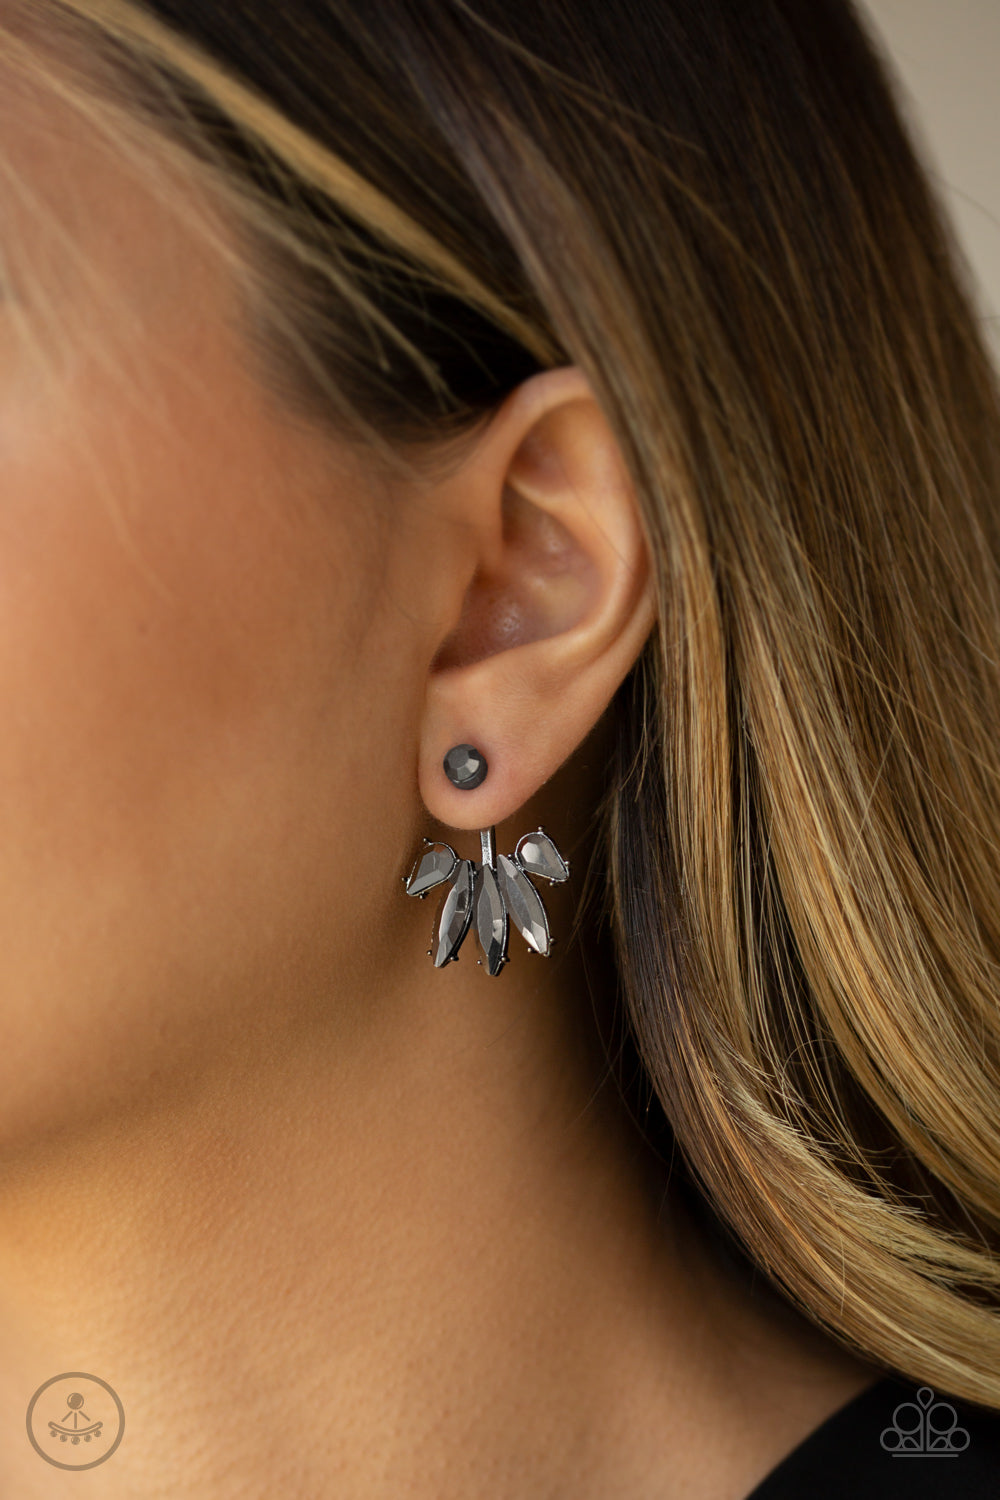 Paparazzi Stunningly Striking - Black - Hematite Rhinestones - Double Sided - Post Earrings - $5 Jewelry with Ashley Swint